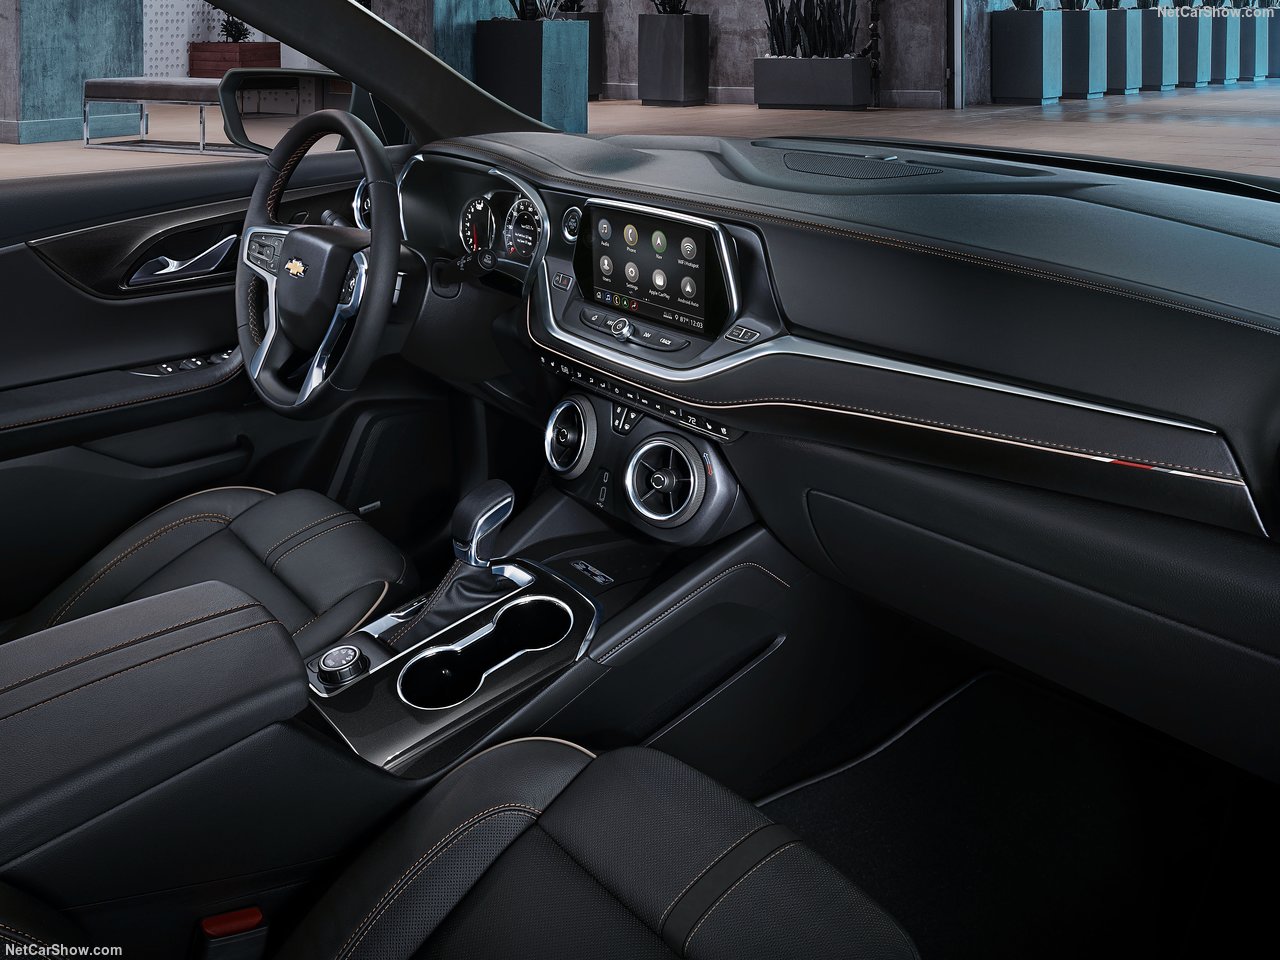 Chevrolet Blazer interior - Cockpit